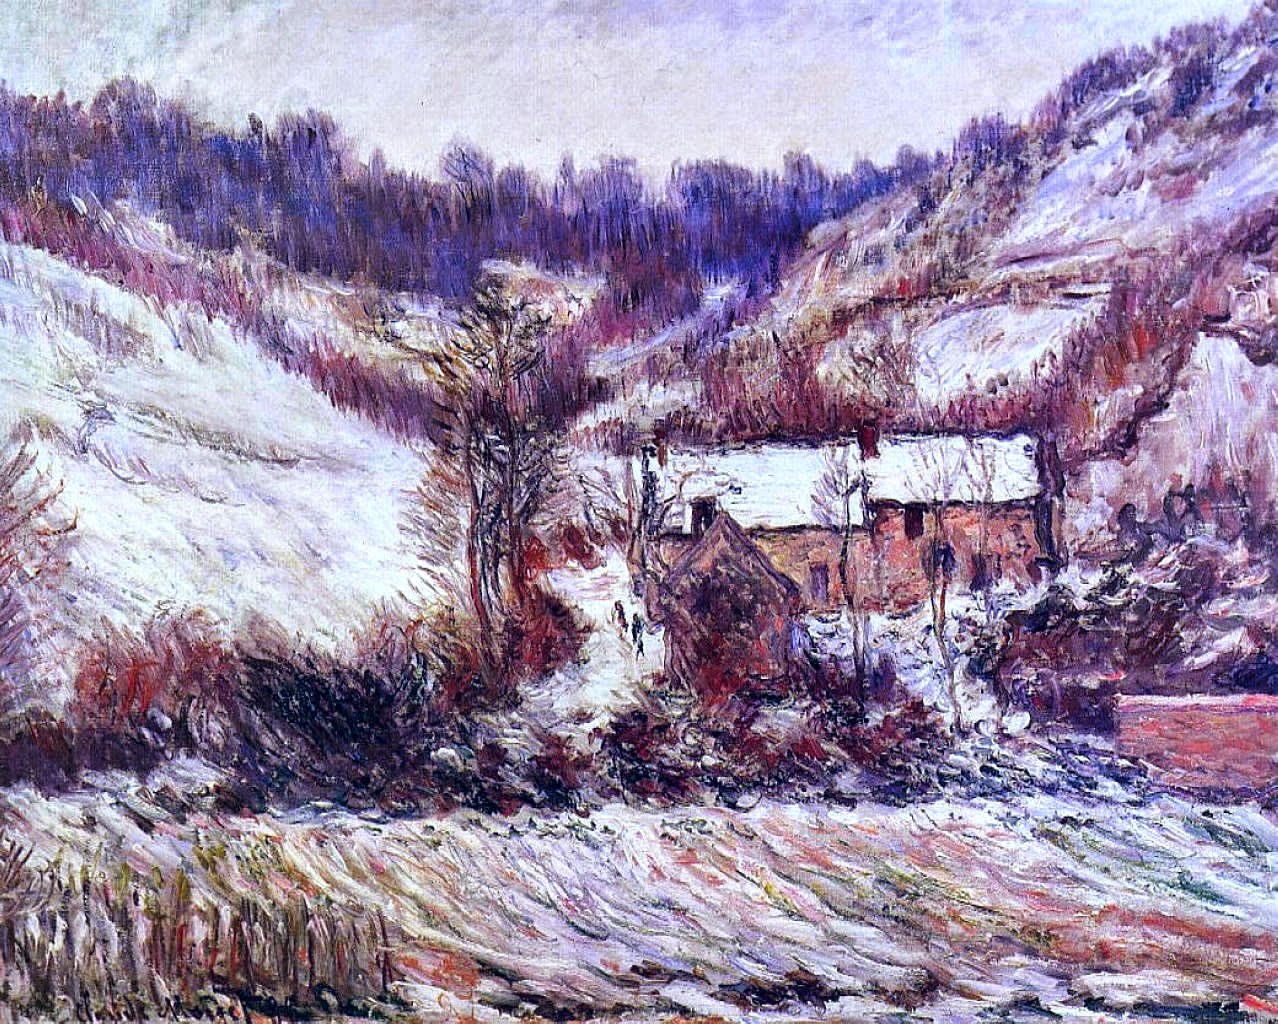 Claude+Monet-1840-1926 (62).jpg